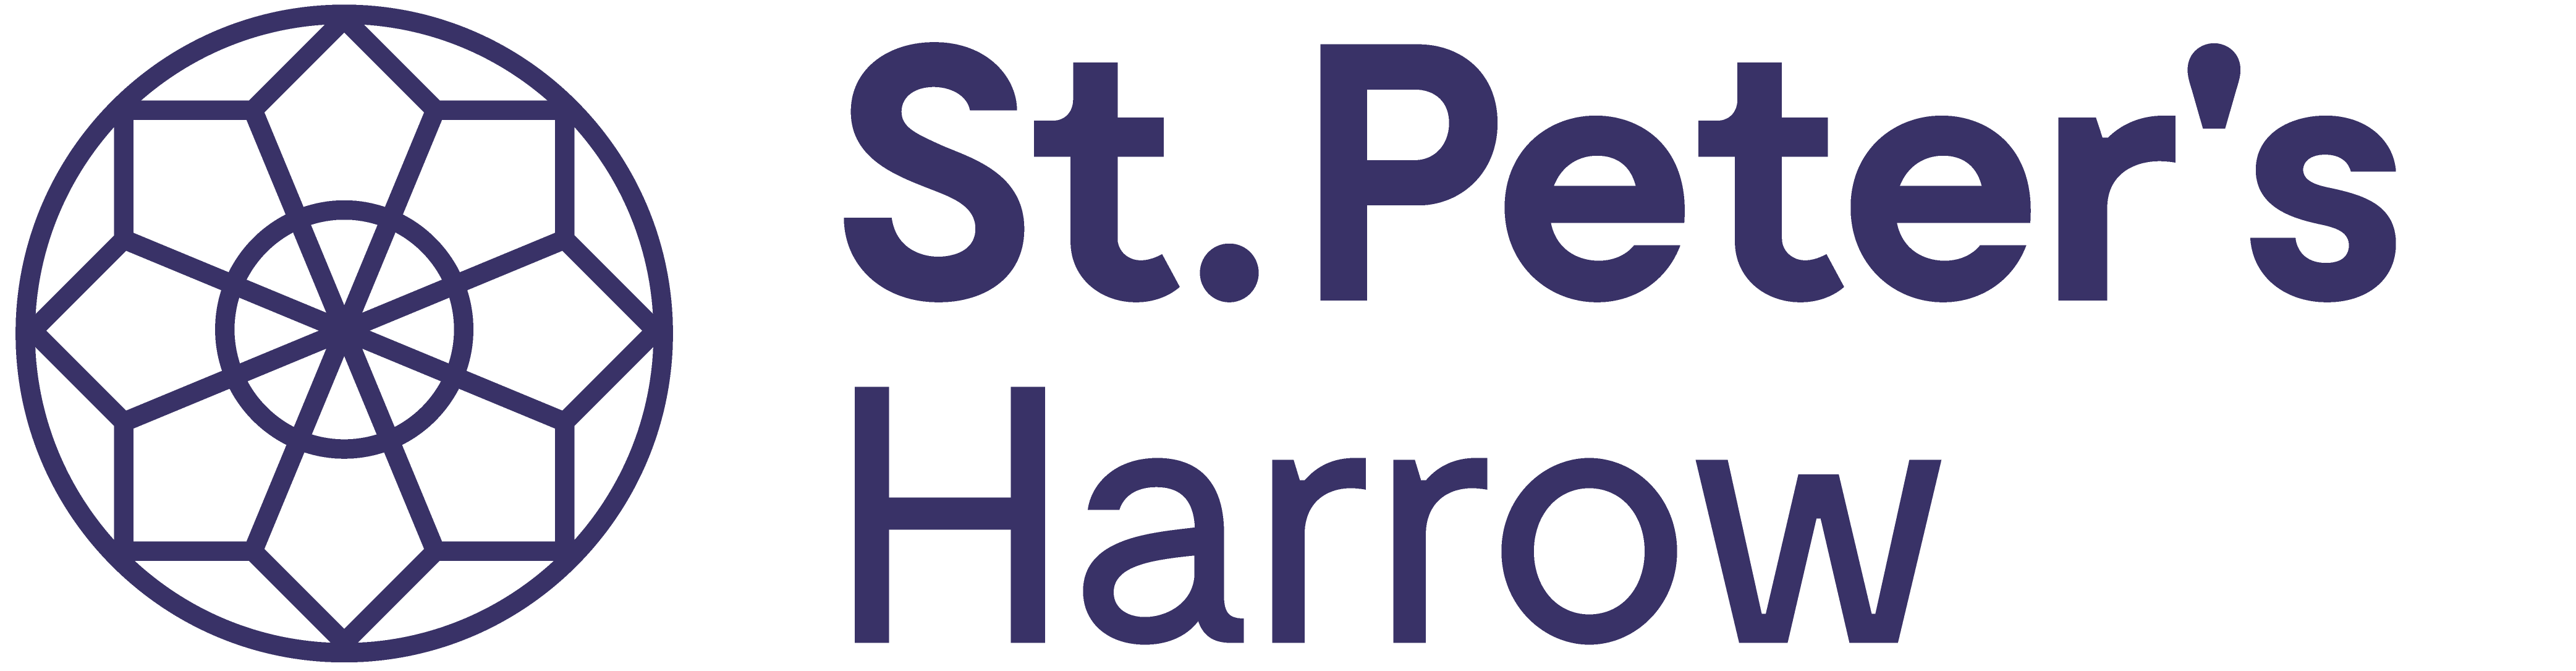 logo for St. Peter's Church Harrow